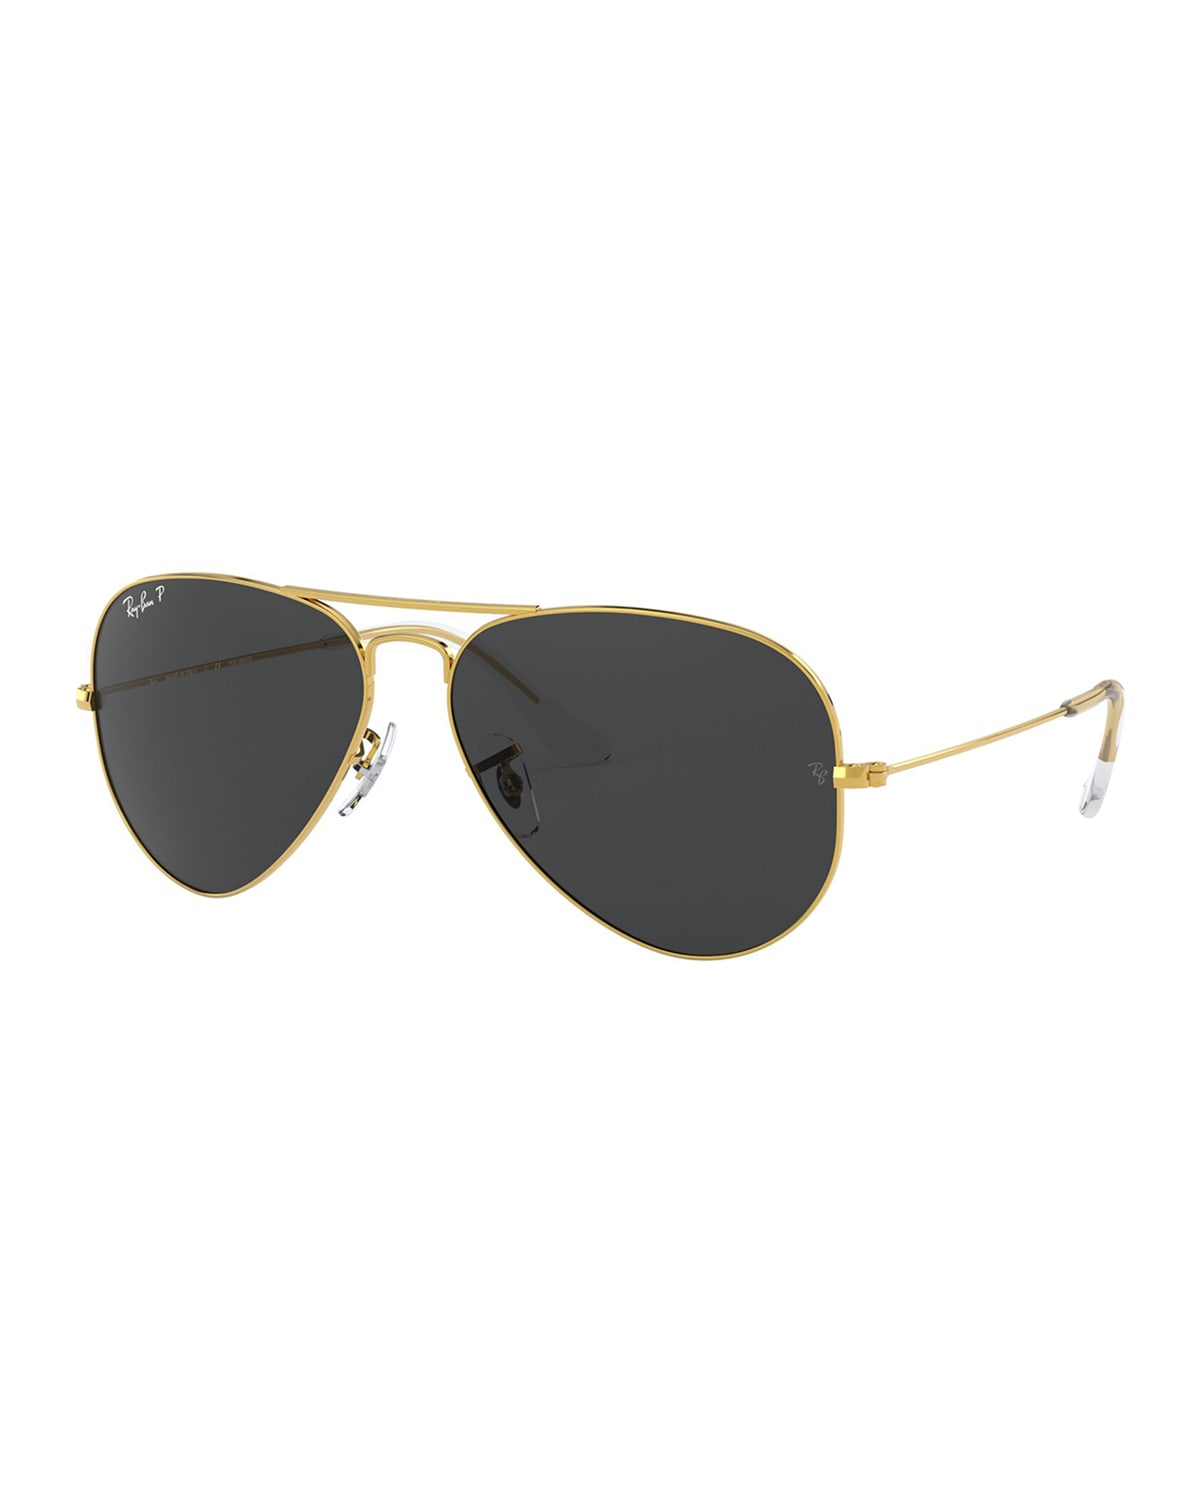 Ray Ban Metal Polarized Aviator Sunglasses In Gold